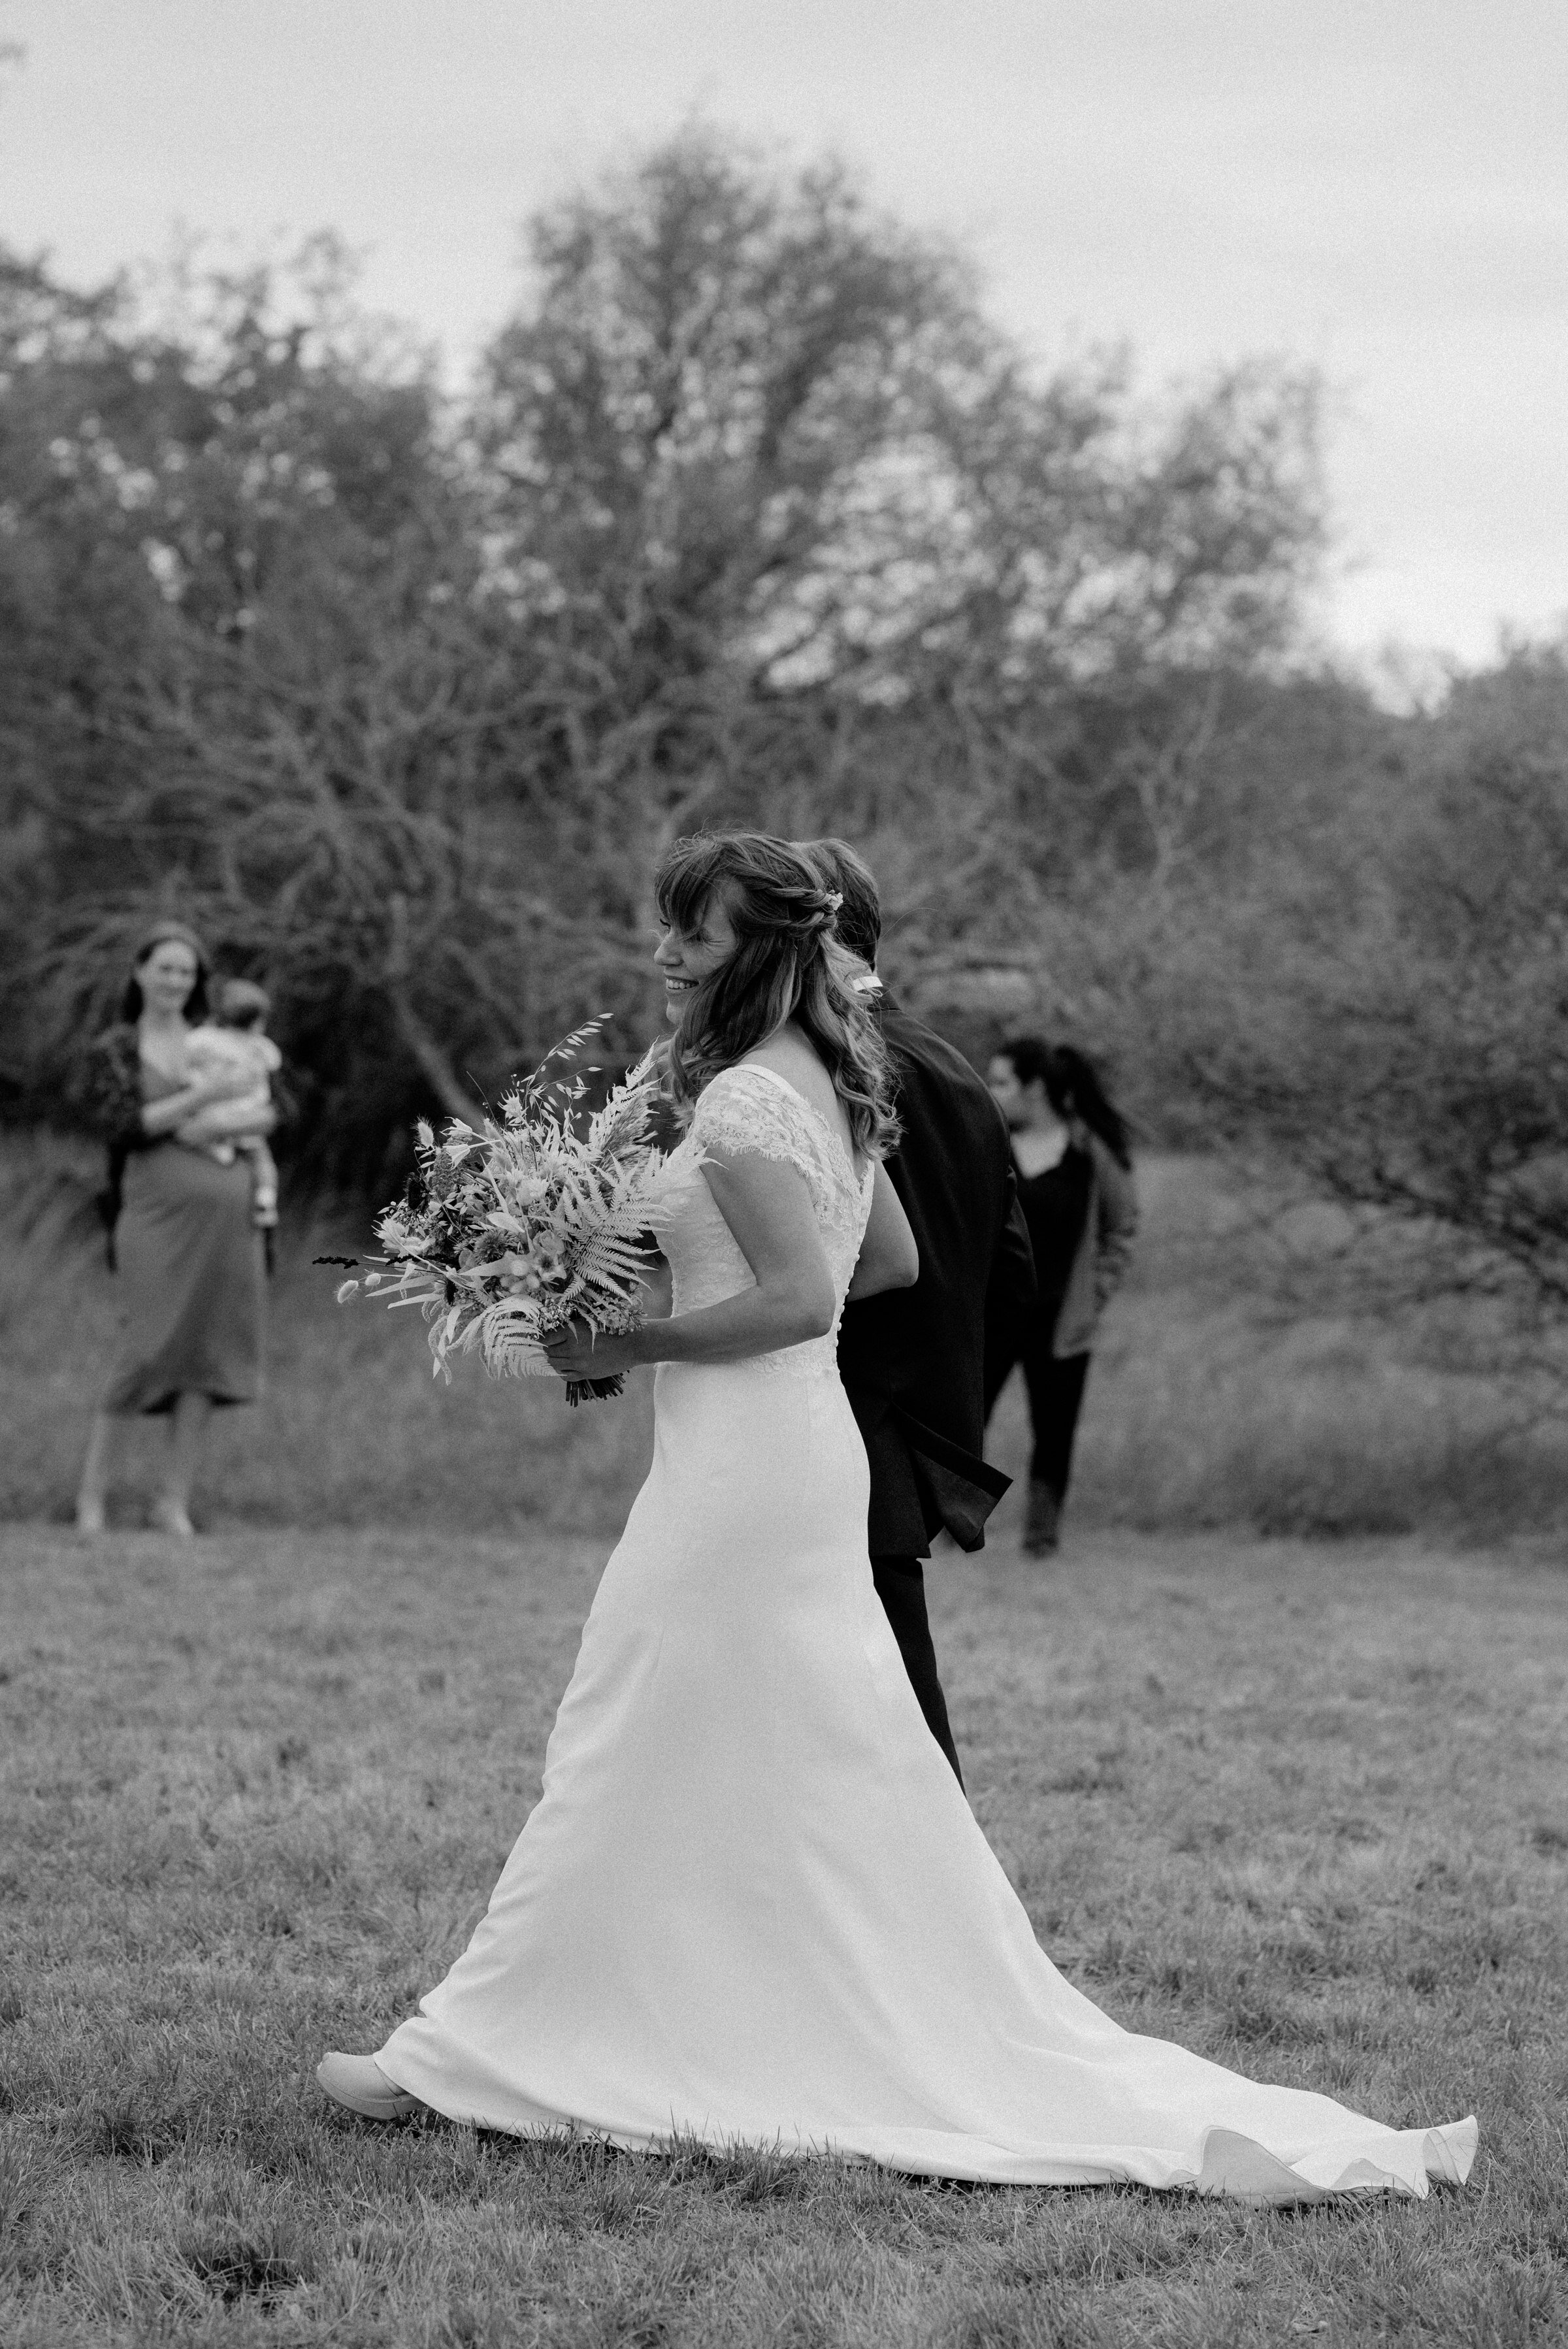  bride walking down the aisle plat at kyle wedding venue austin 